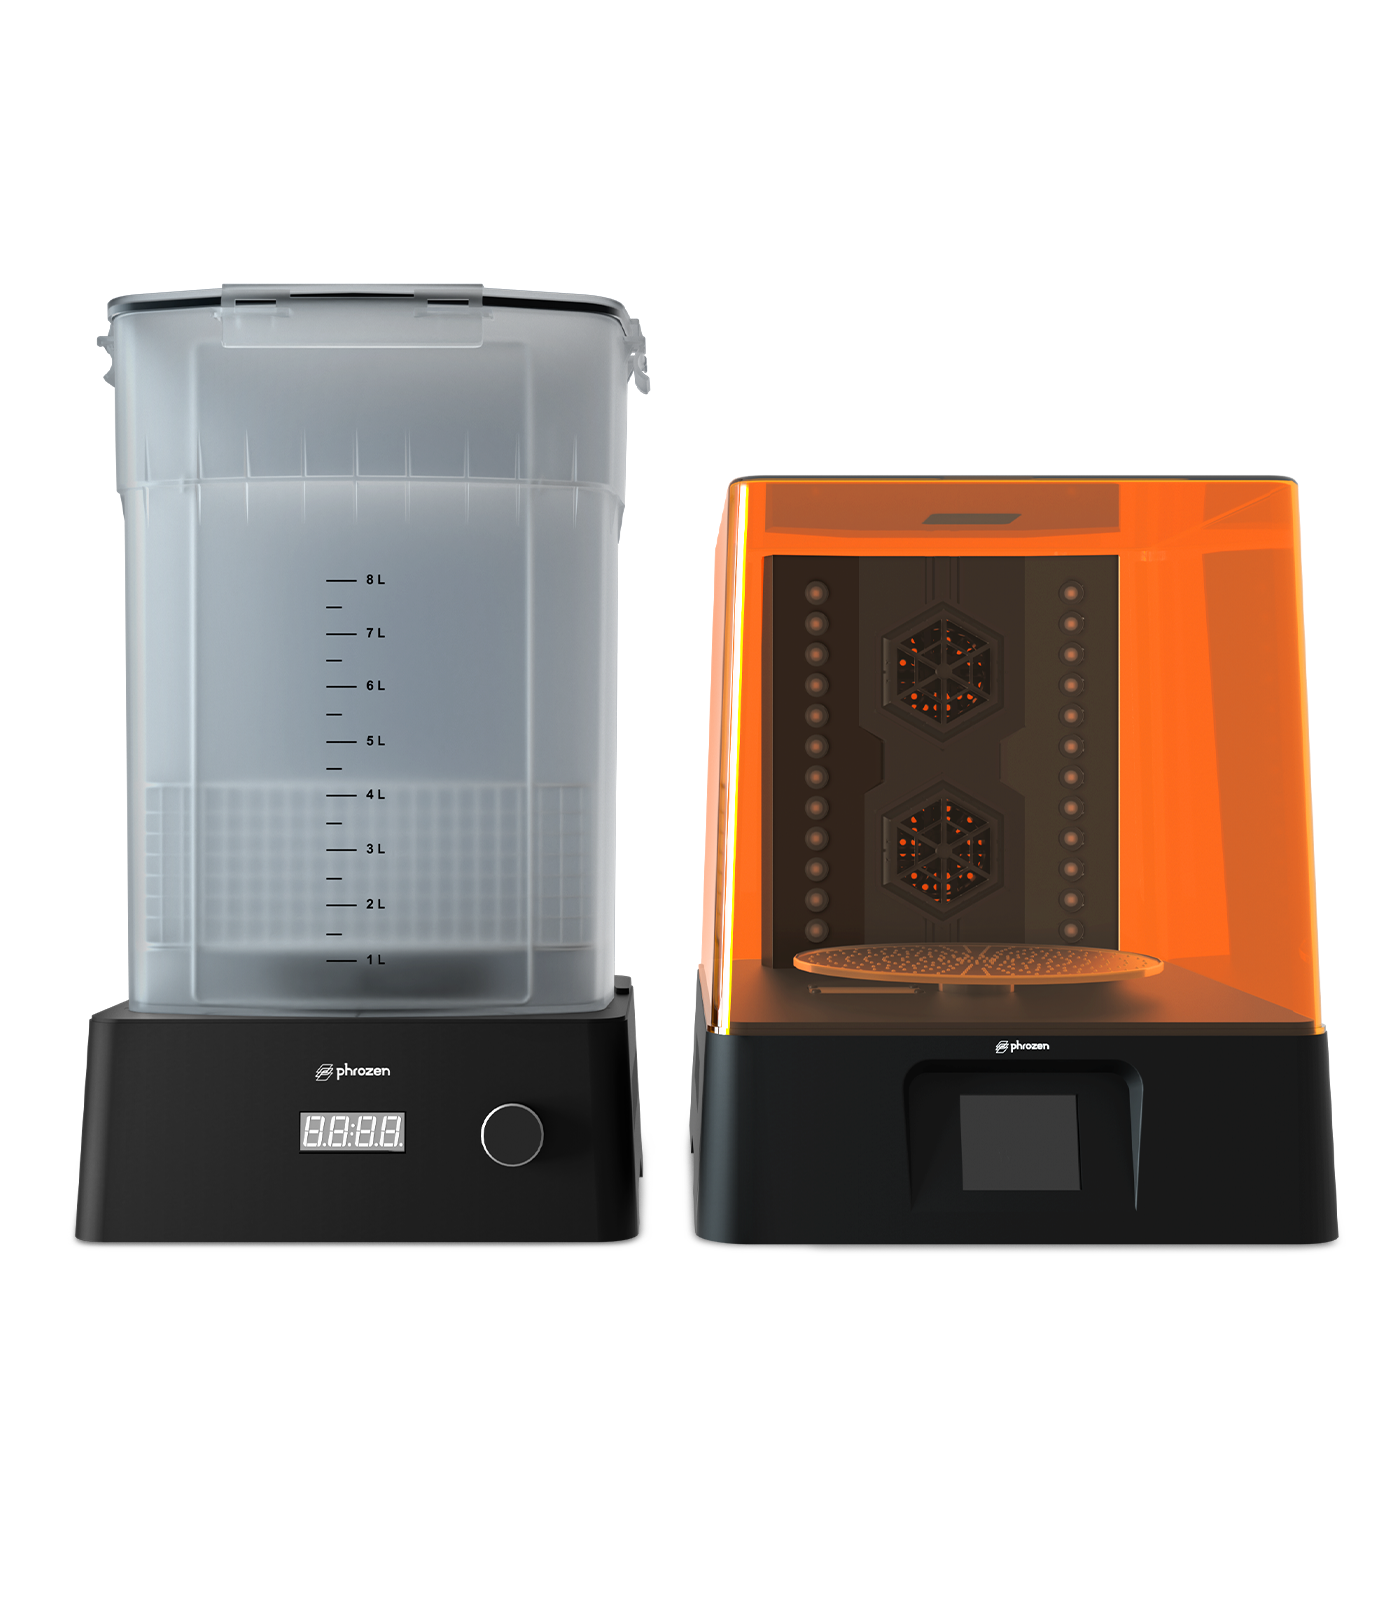 Phrozen sonic mini stampante 3d a resina 4k fotoindurente uv con lcd 15 5  cm monocromatica SOMIN4K00UK - IdeaLuceStore